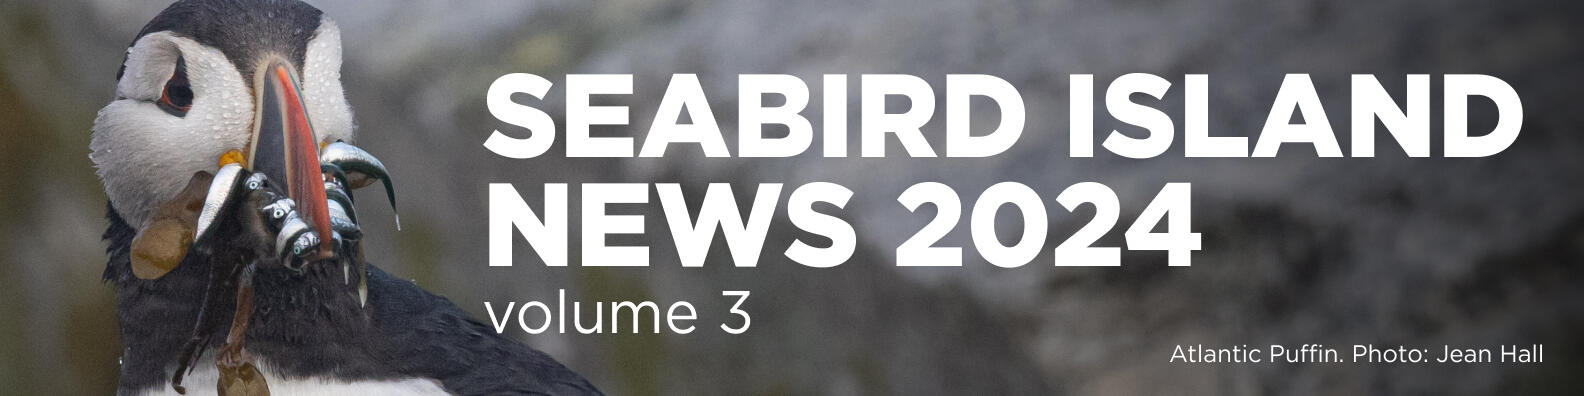 Seabird Island News Banner - Volume 03